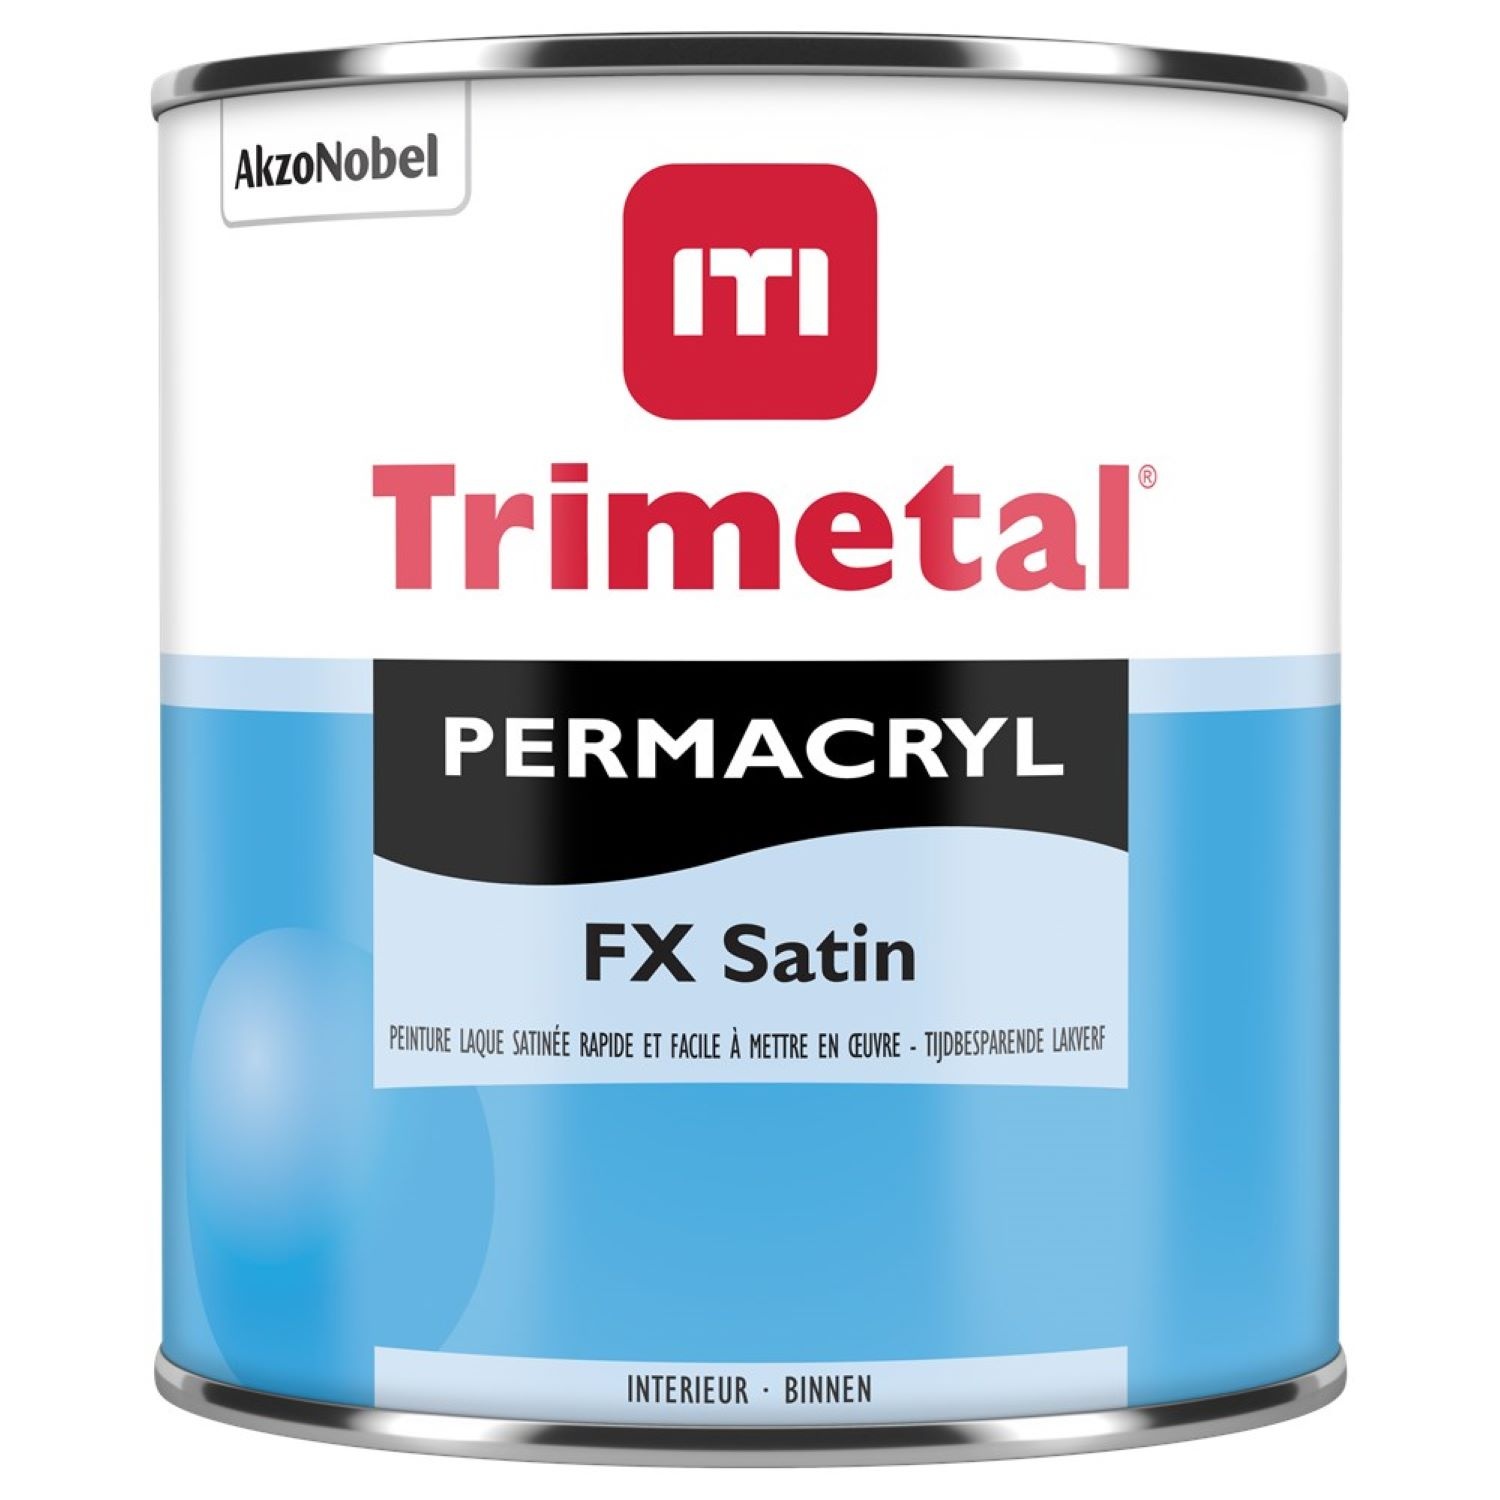 Trimetal Permacryl Fx Satin 2,5 Liter